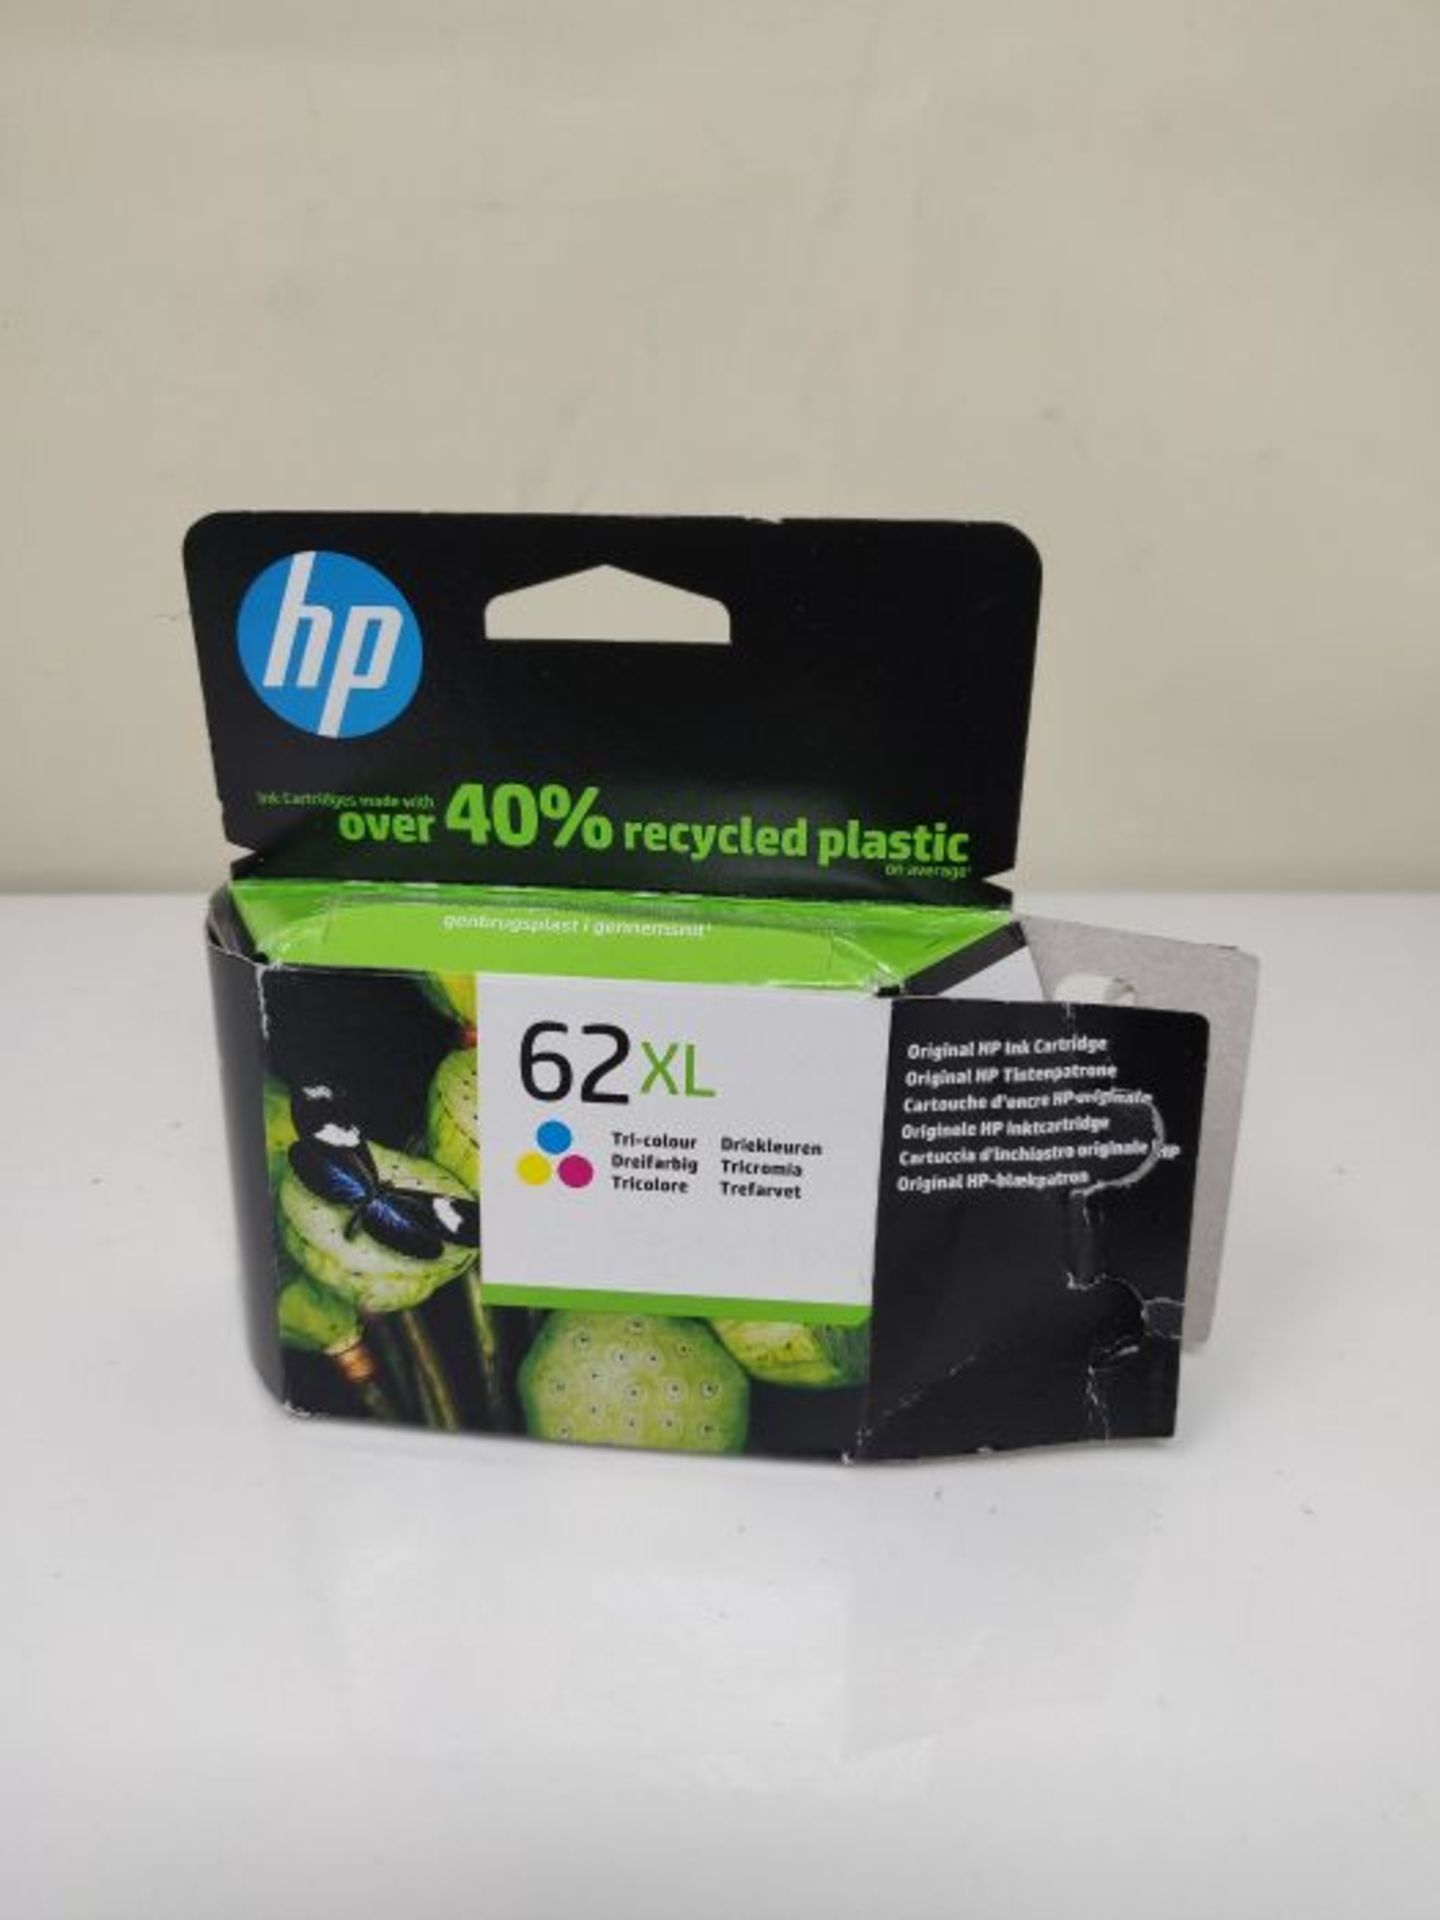 HP C2P07AE 62XL High Yield Original Ink Cartridge, Tri-color, Single Pack - Image 2 of 3